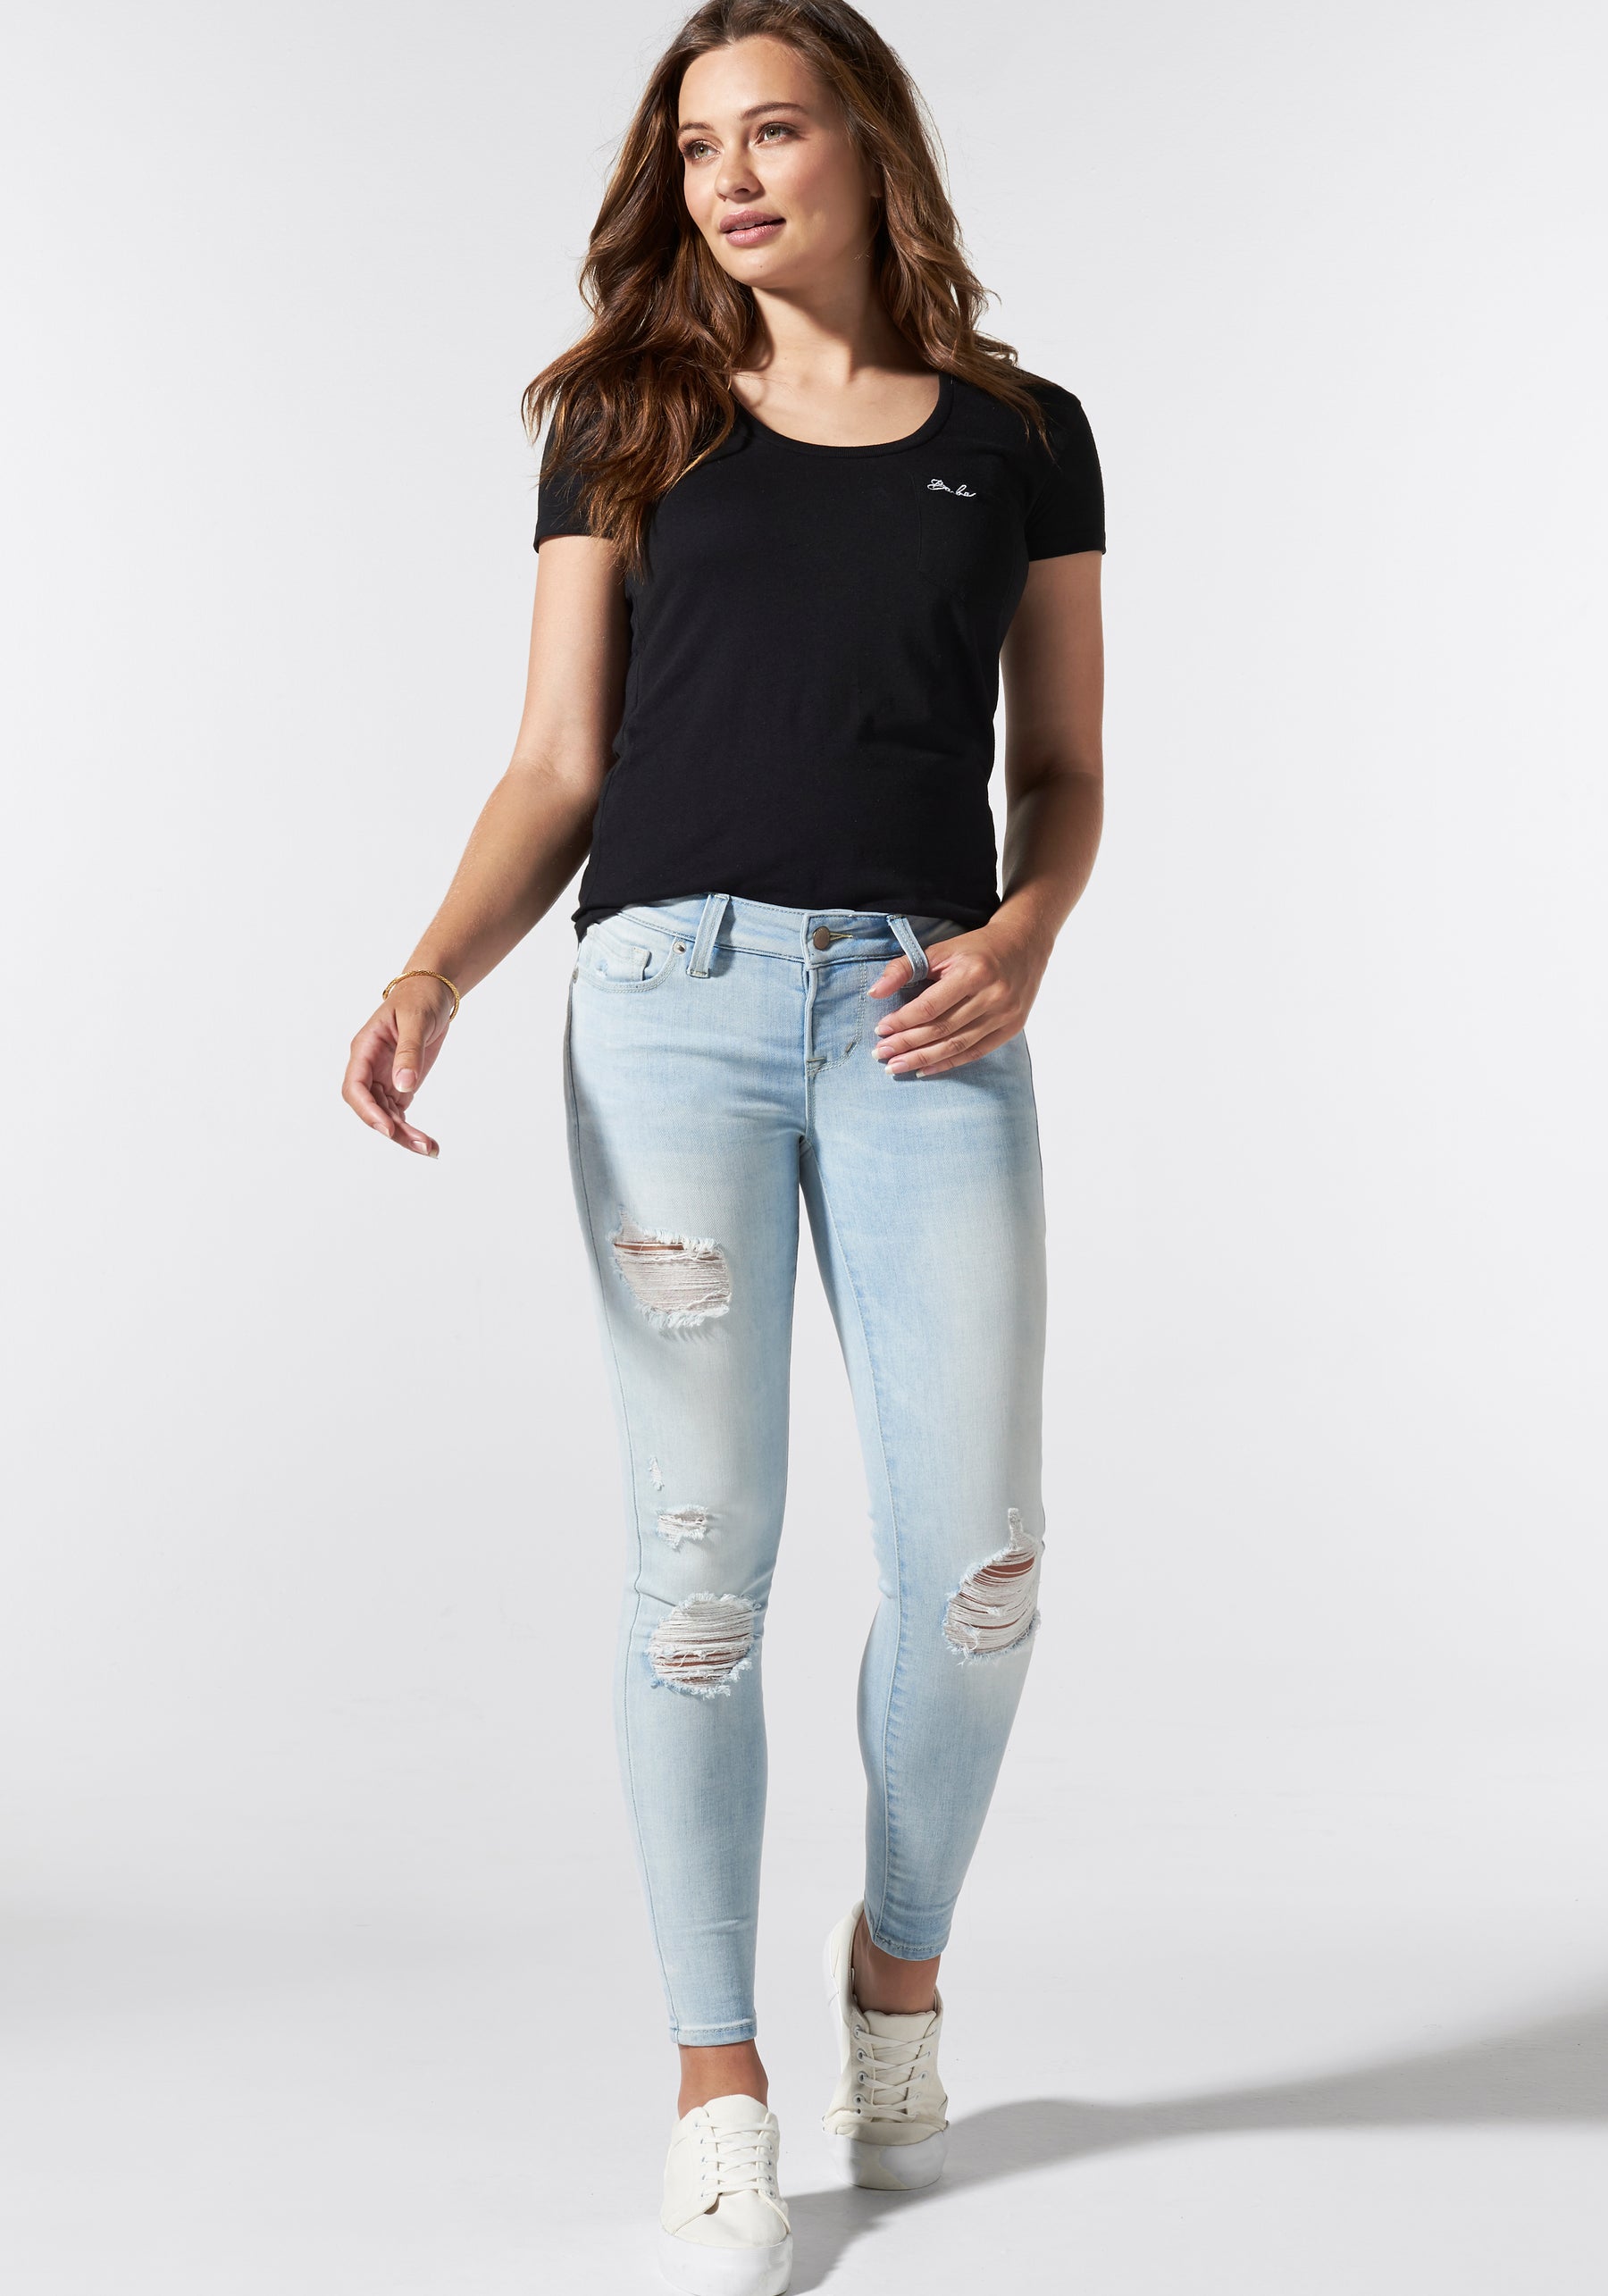 BLANQI Postpartum Support Skinny Jeans - Smoke Wash